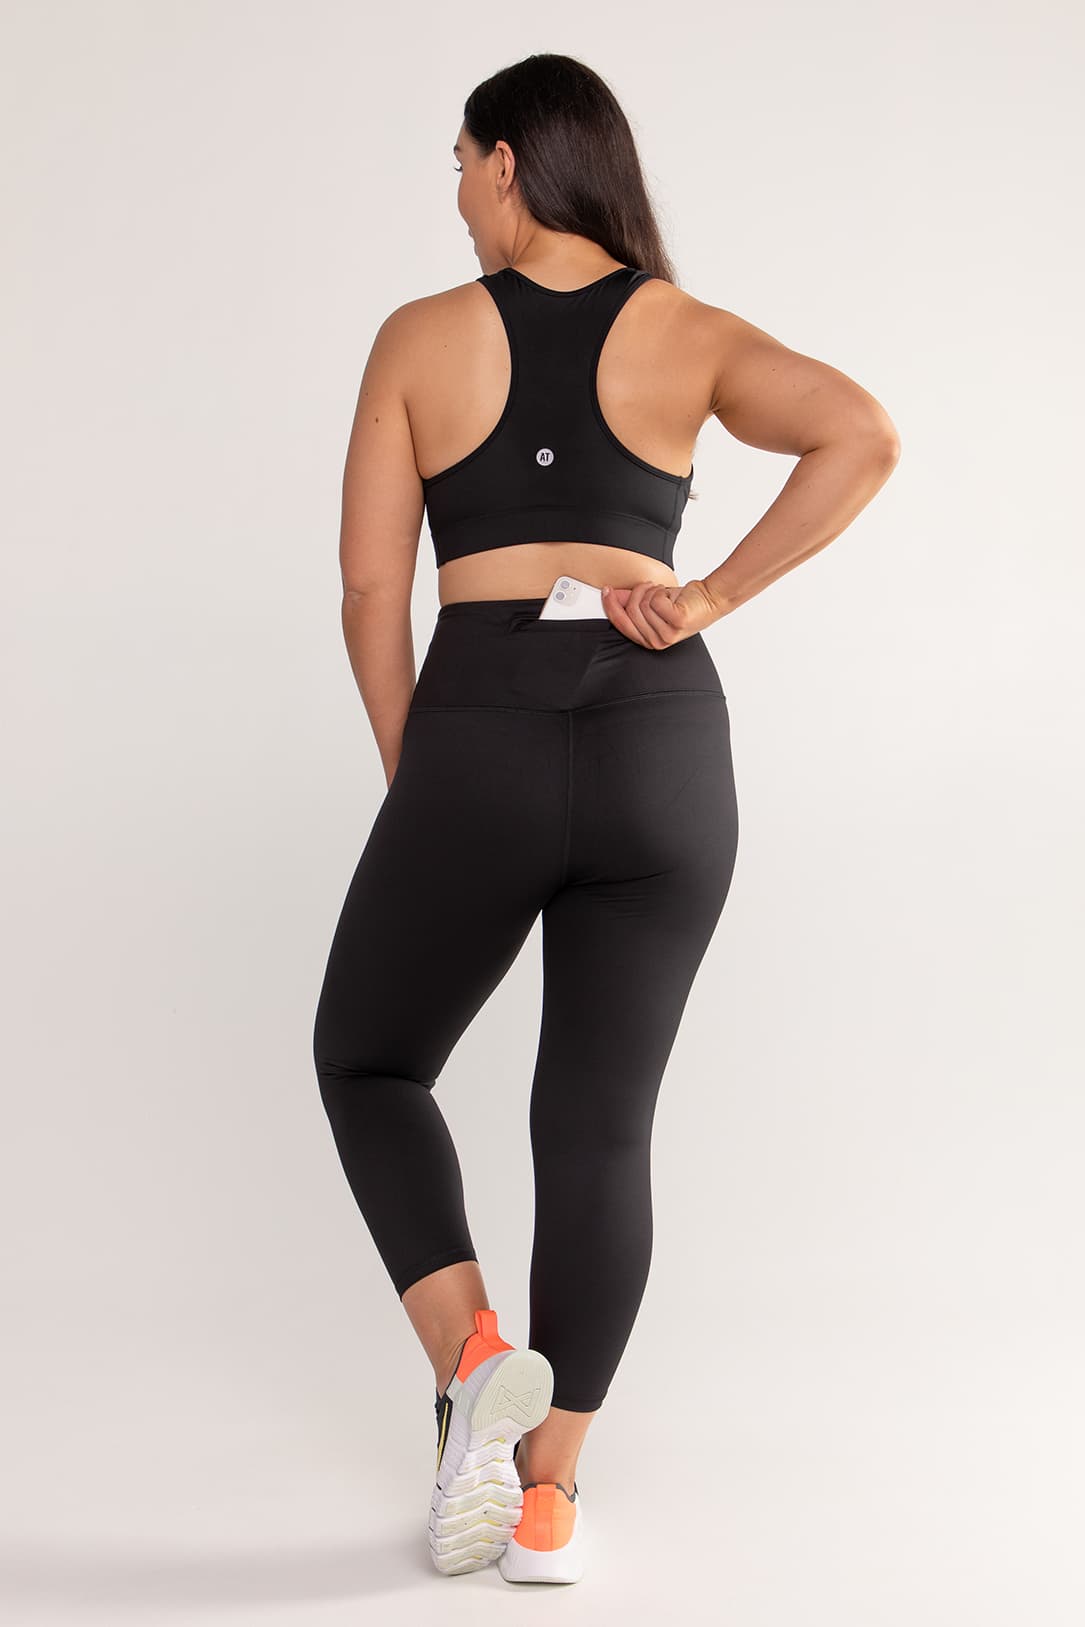 Buy All In Motion womens ultra high waisted 7 8 leggings black Online